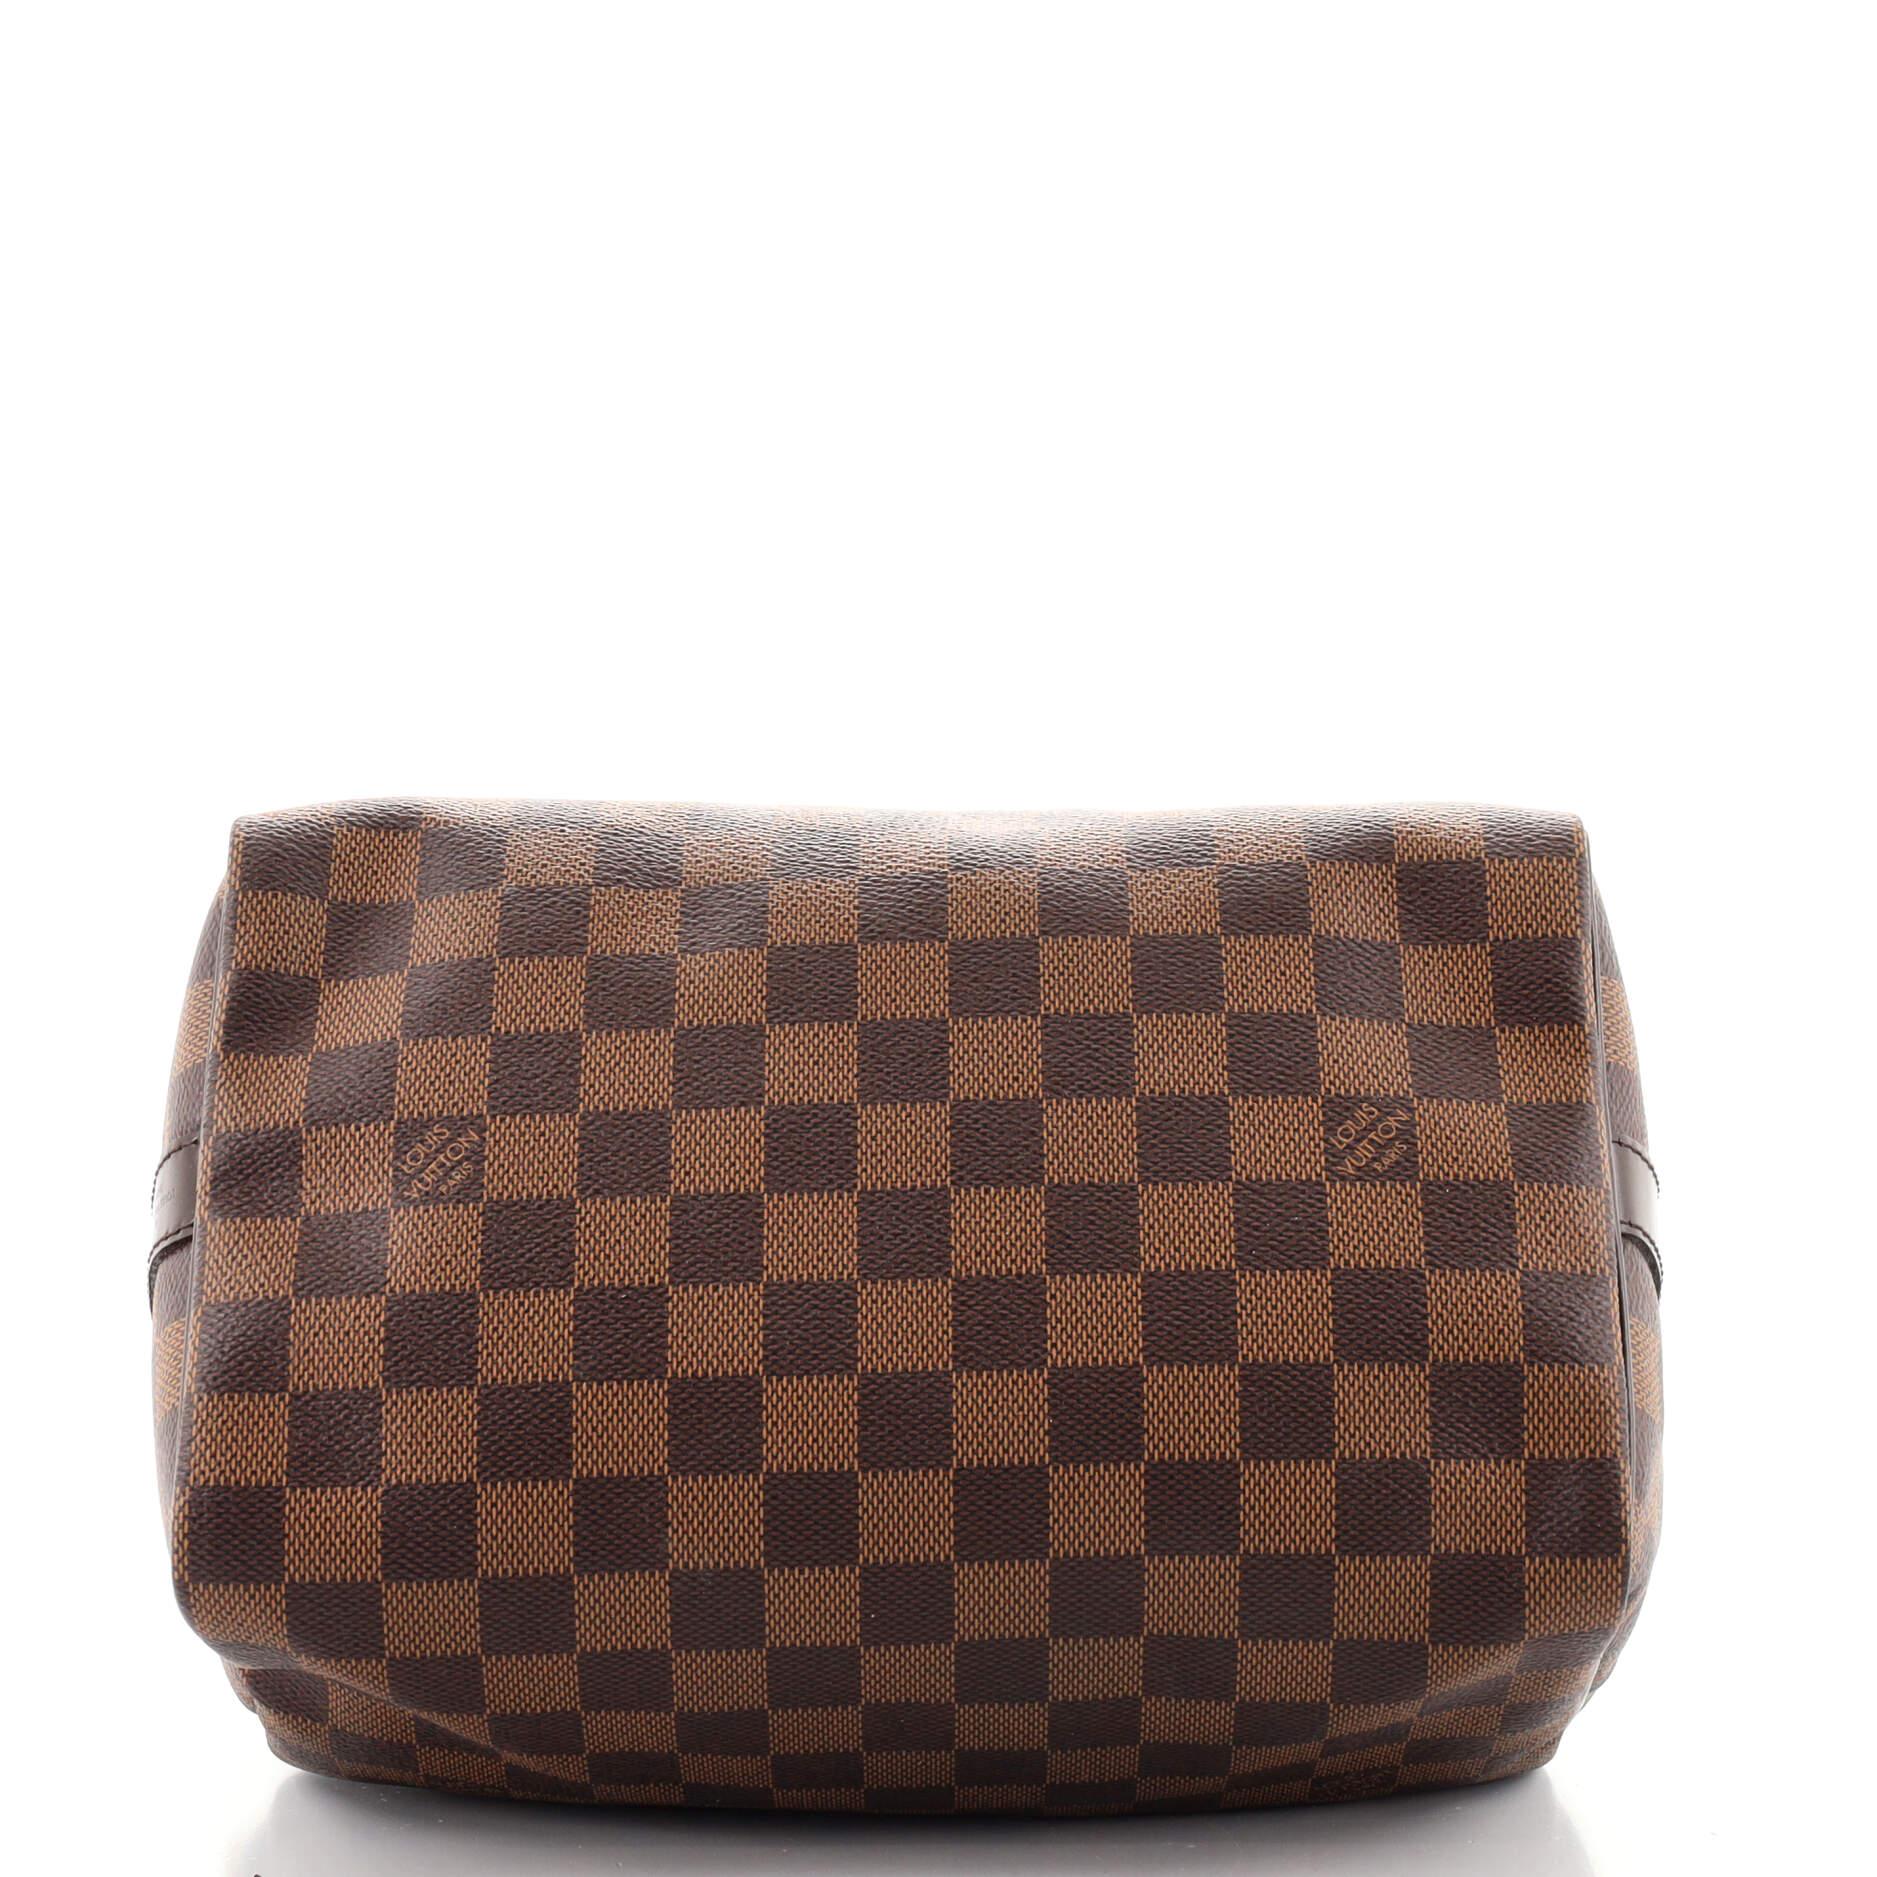 Women's or Men's Louis Vuitton Speedy Bandouliere Bag Damier 25